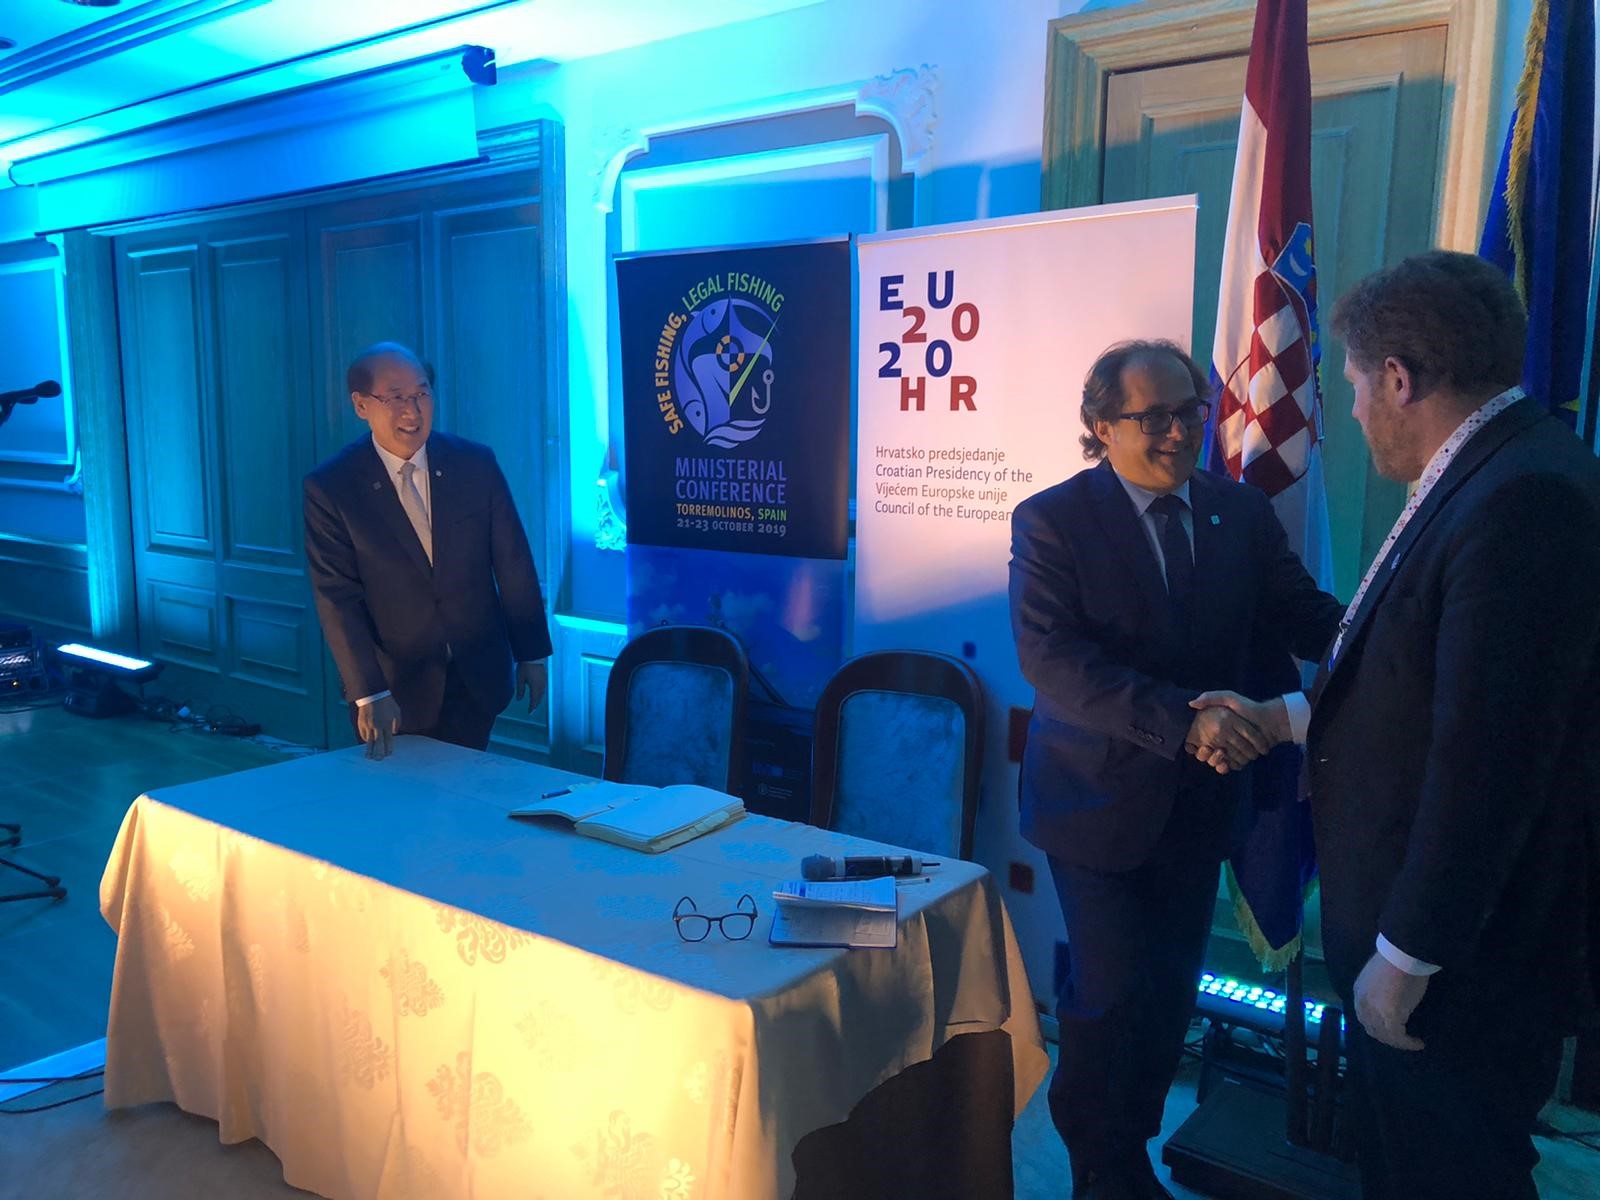 Minister Marek Gróbarczyk and Kitack Lim with Michael Kingston, Opatija, Croatia 2019